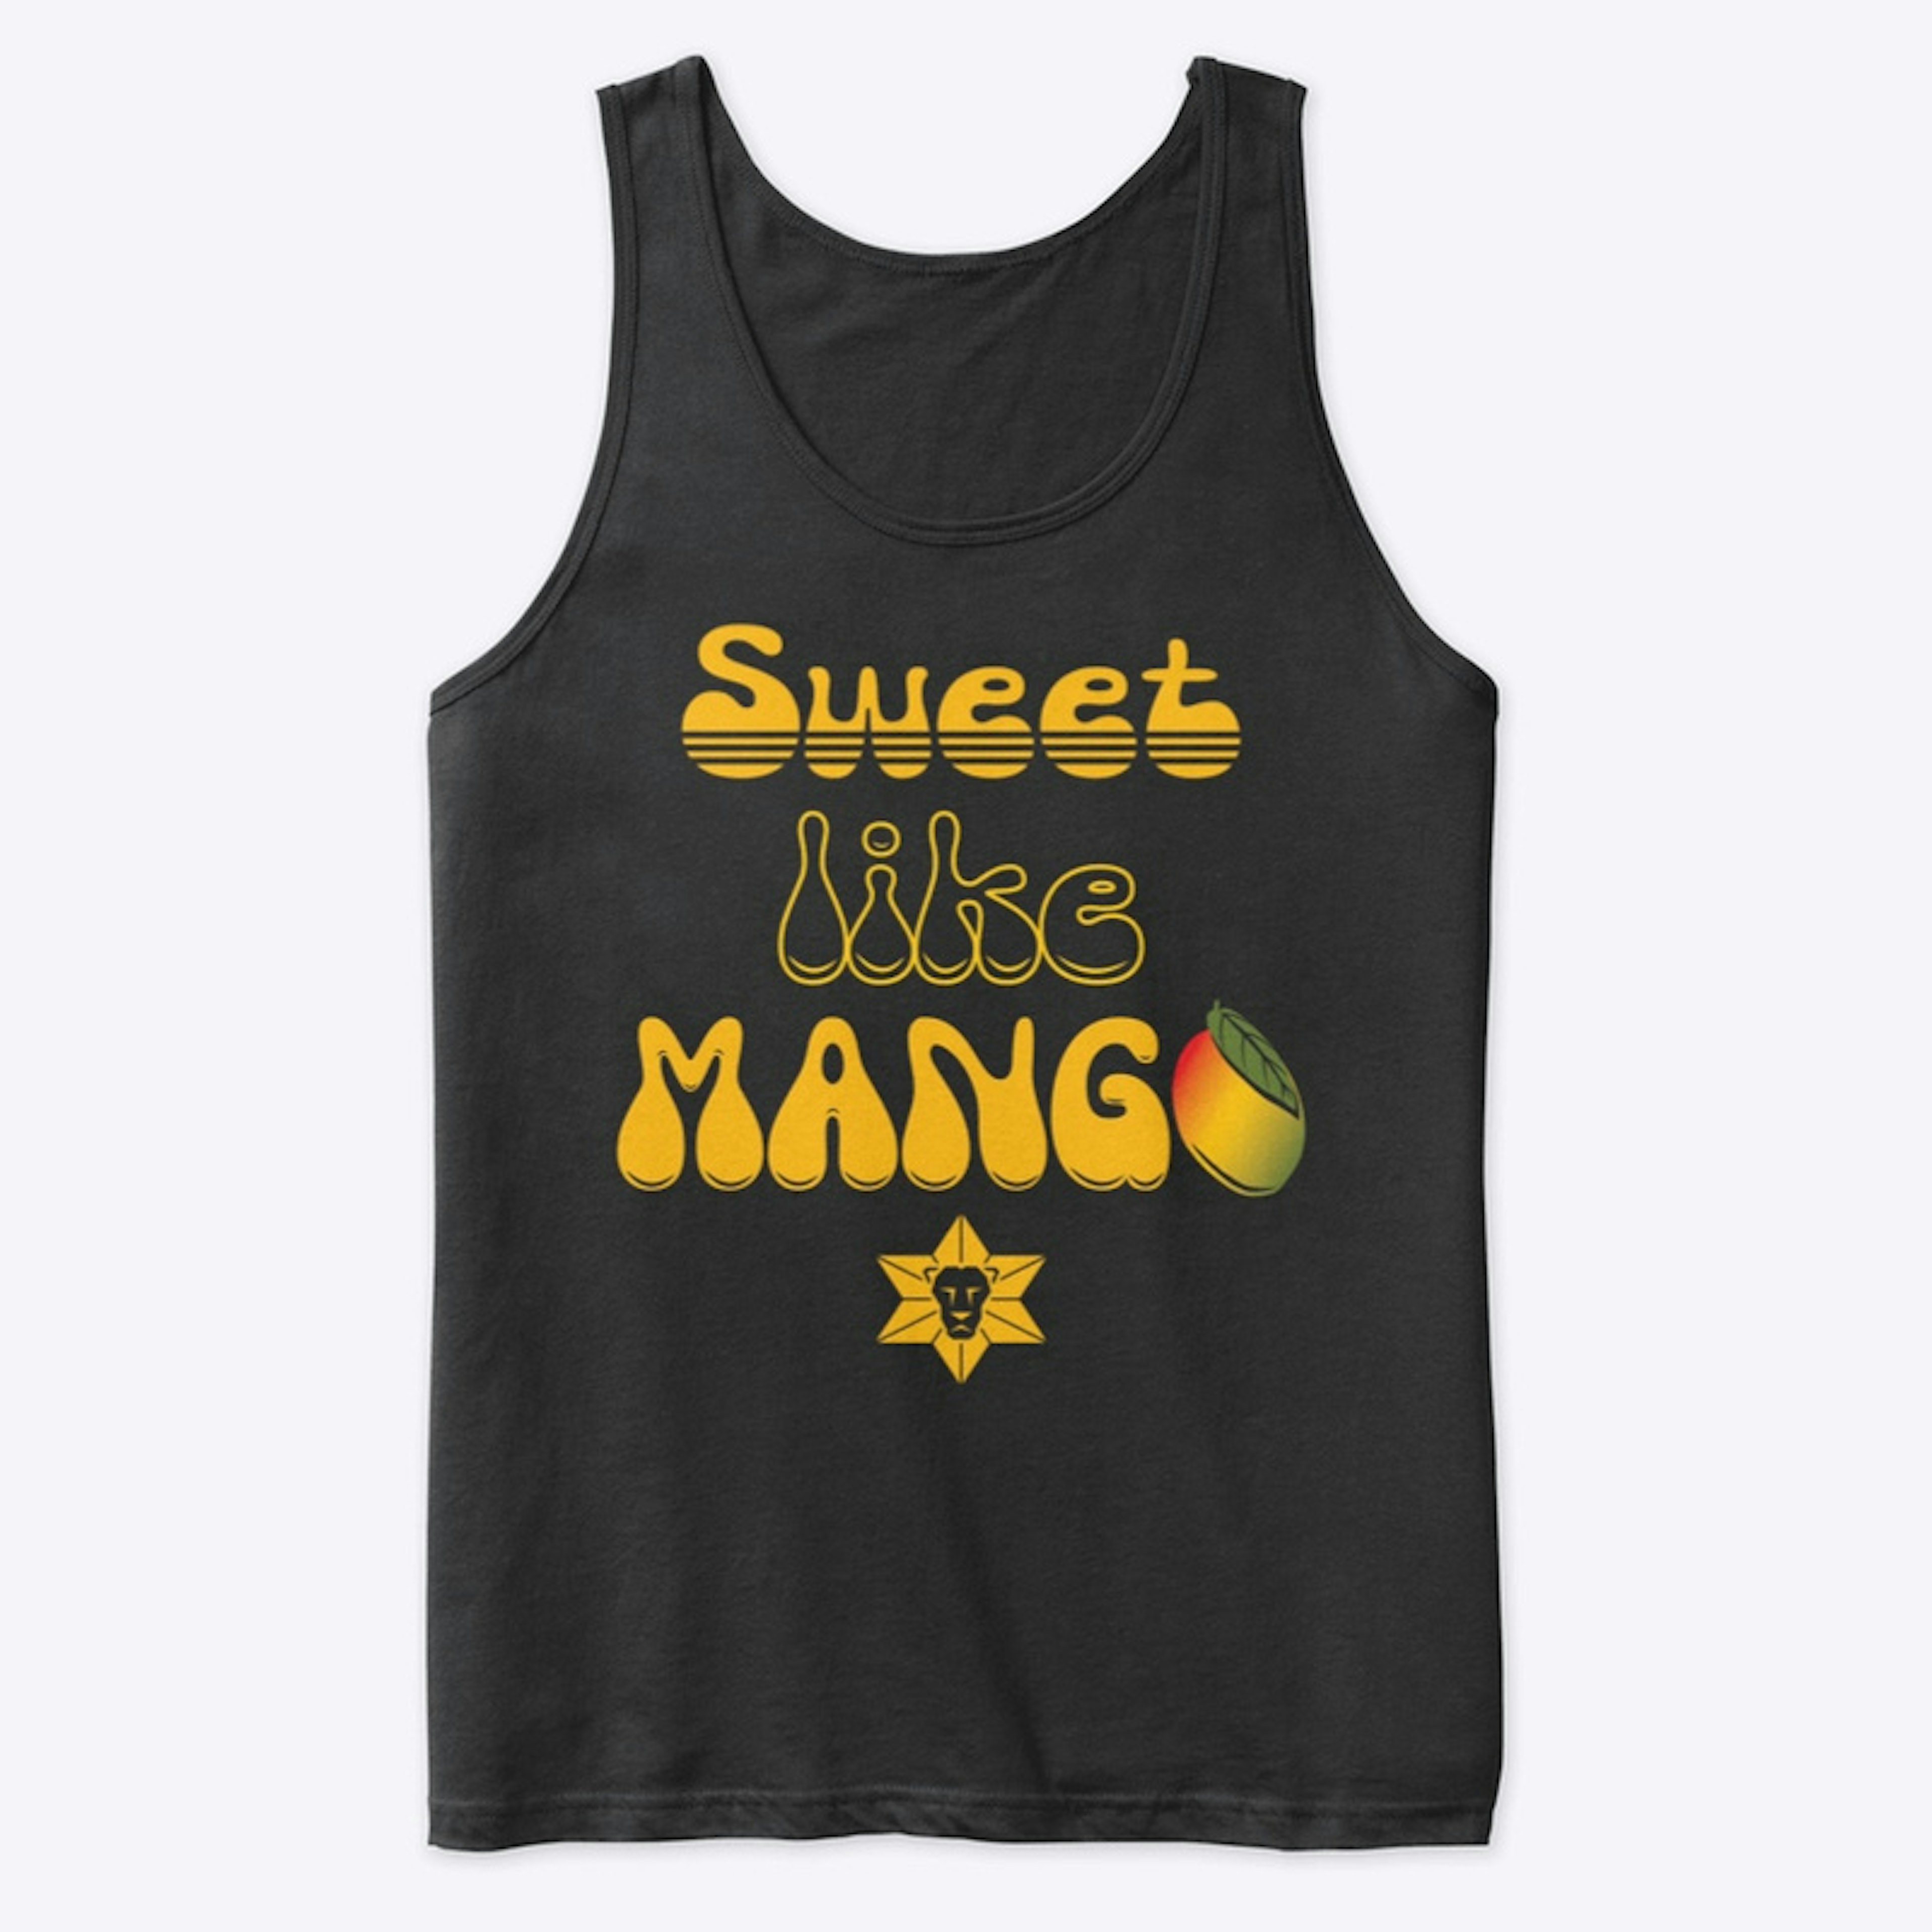 Sweet like Mango tank